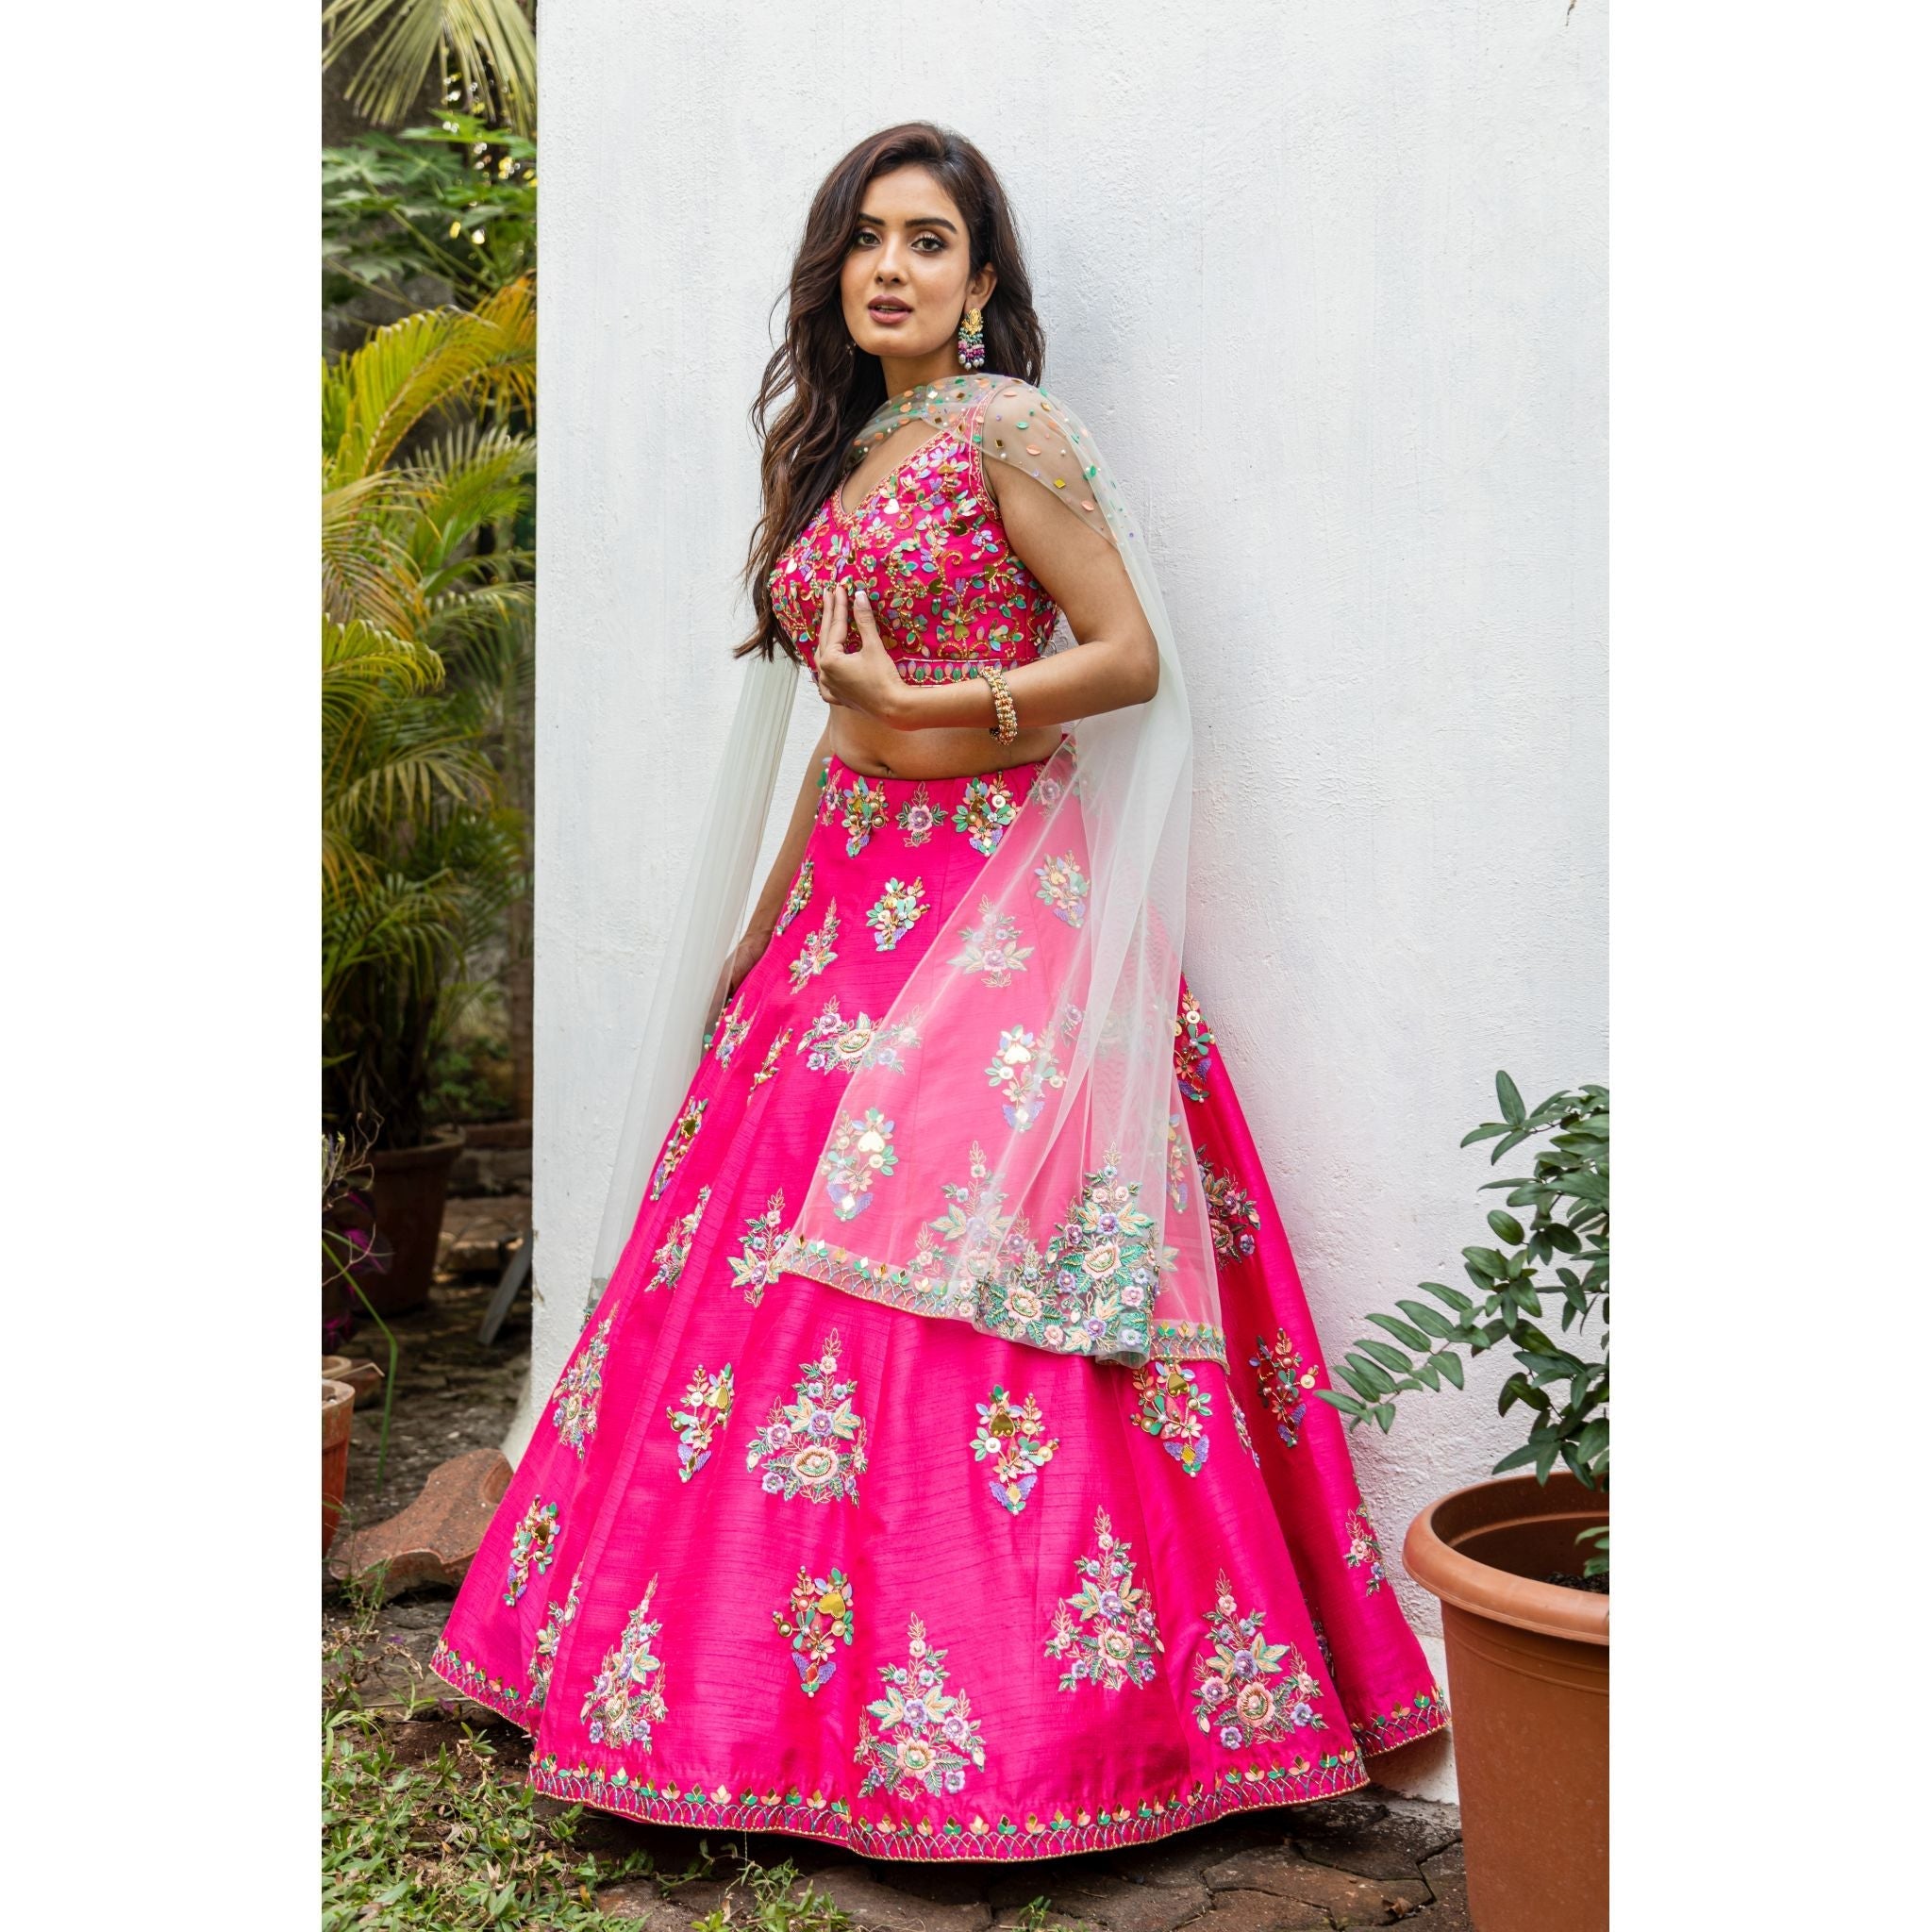 Fuchsia Mirror Lehenga Set - Indian Designer Bridal Wedding Outfit